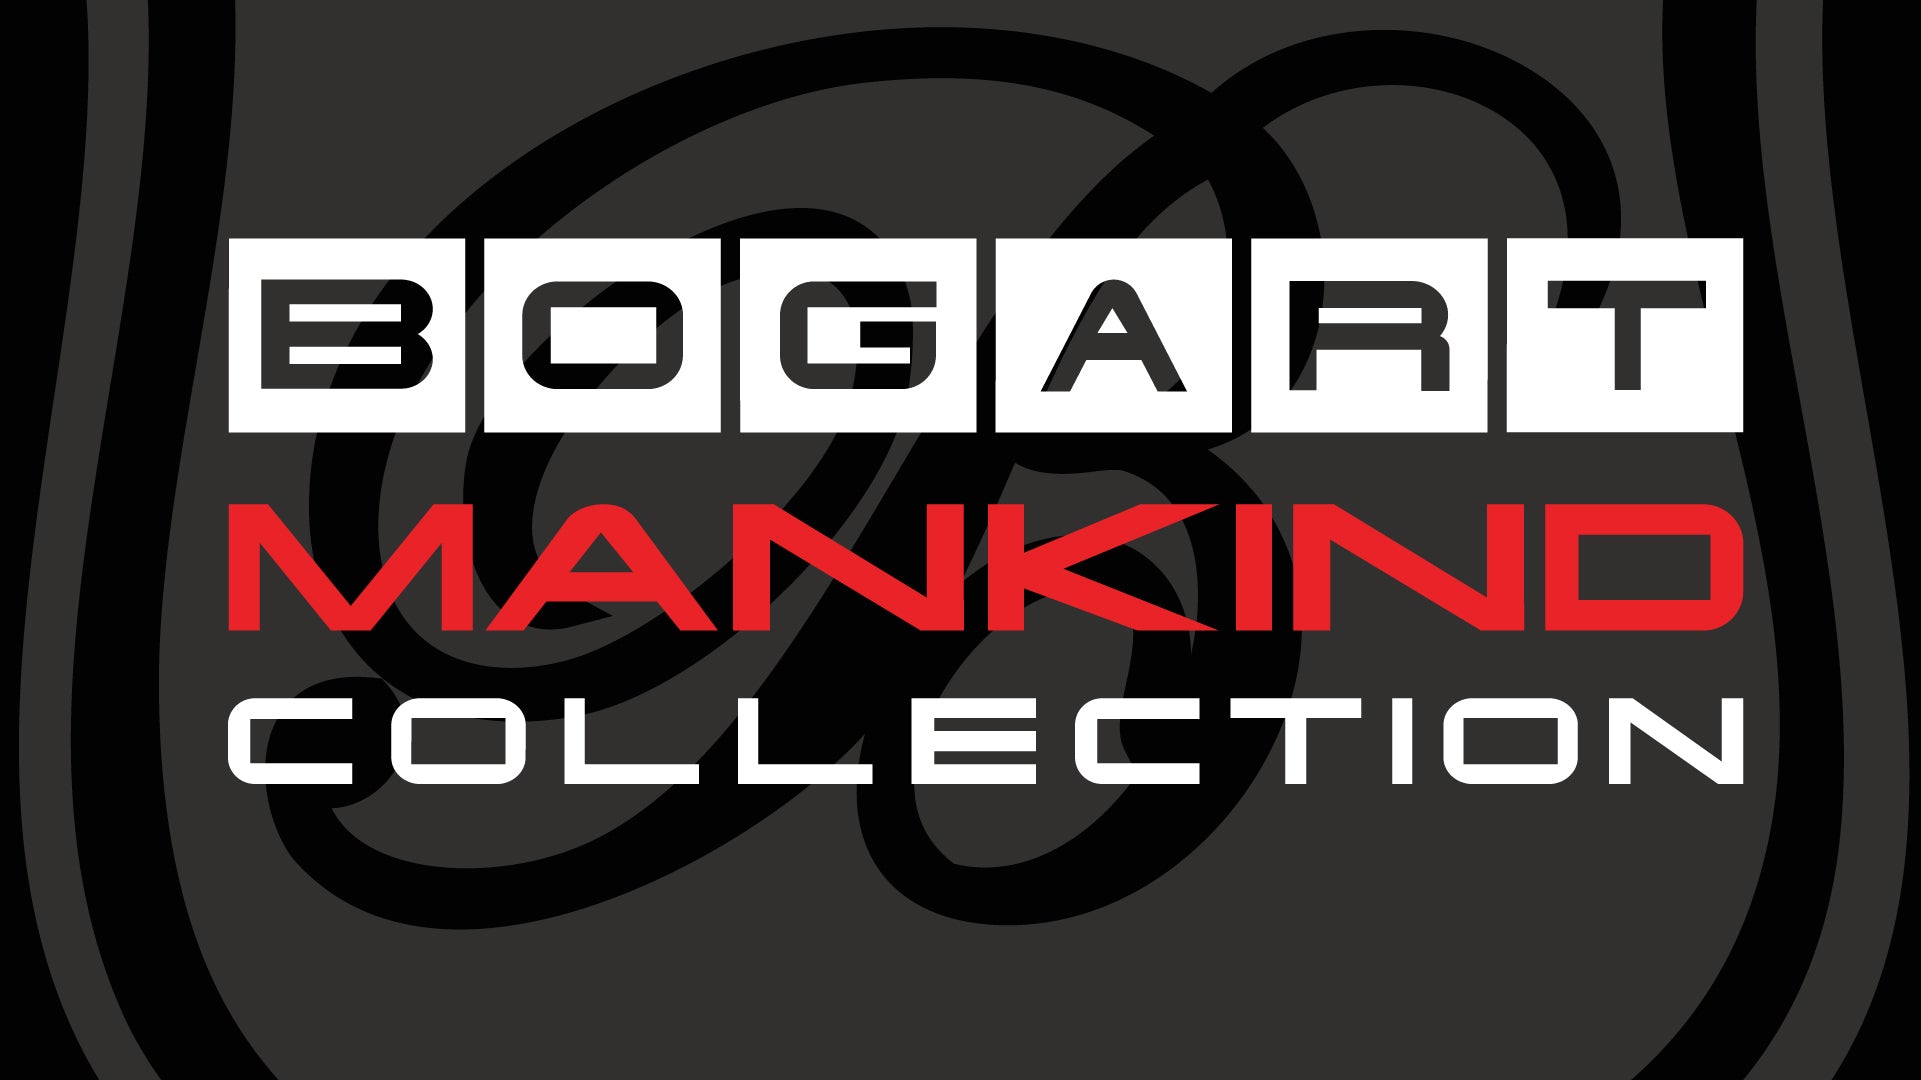 Bogart Mankind Collection